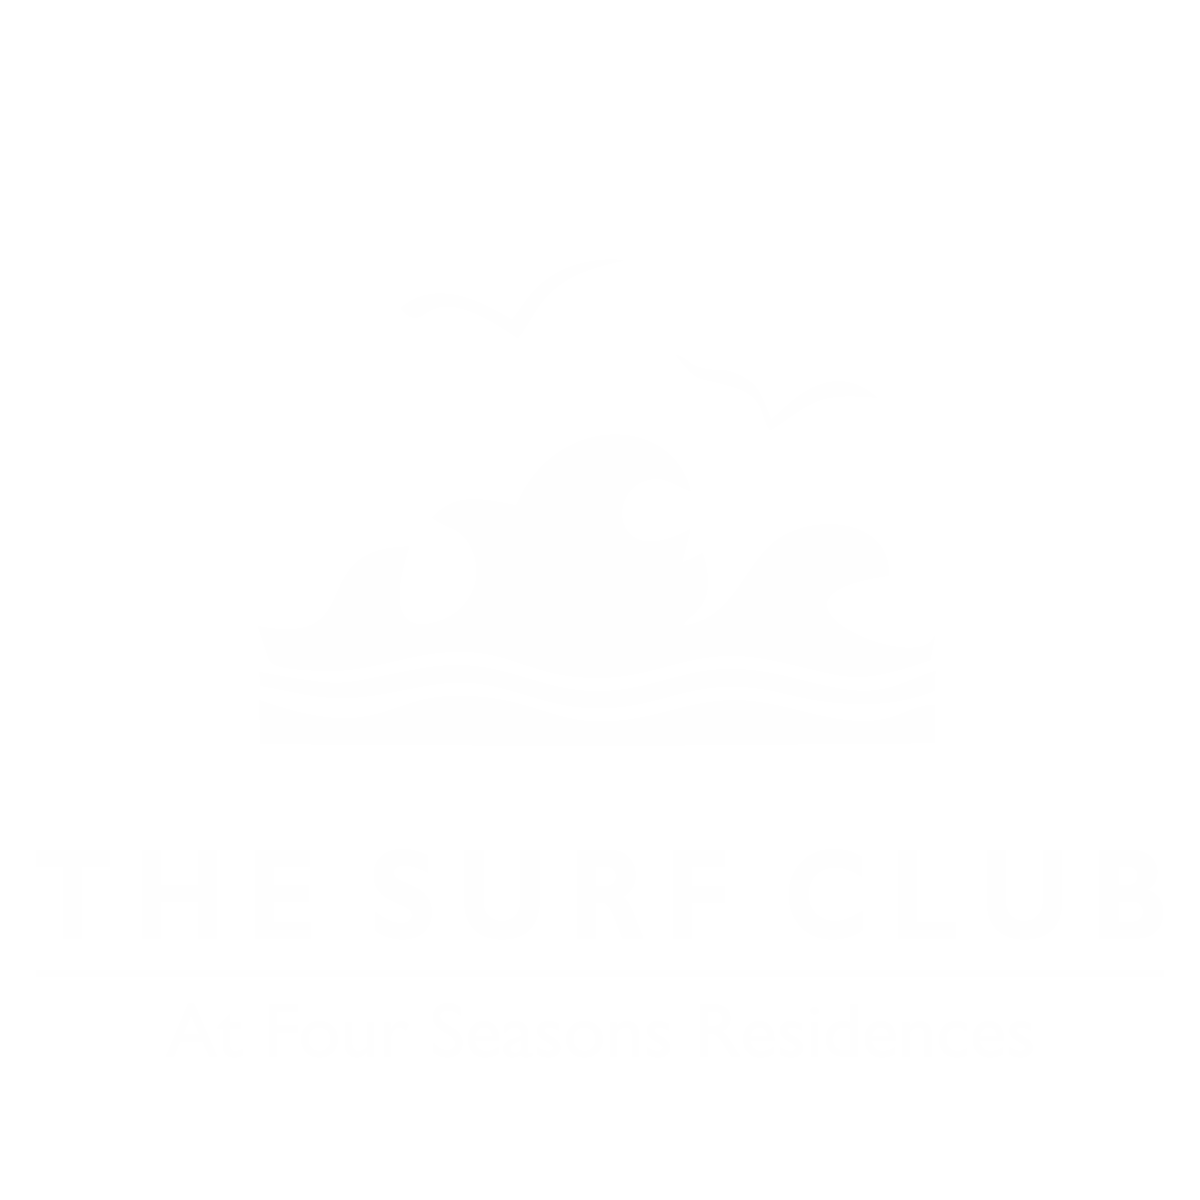 The Surf Club